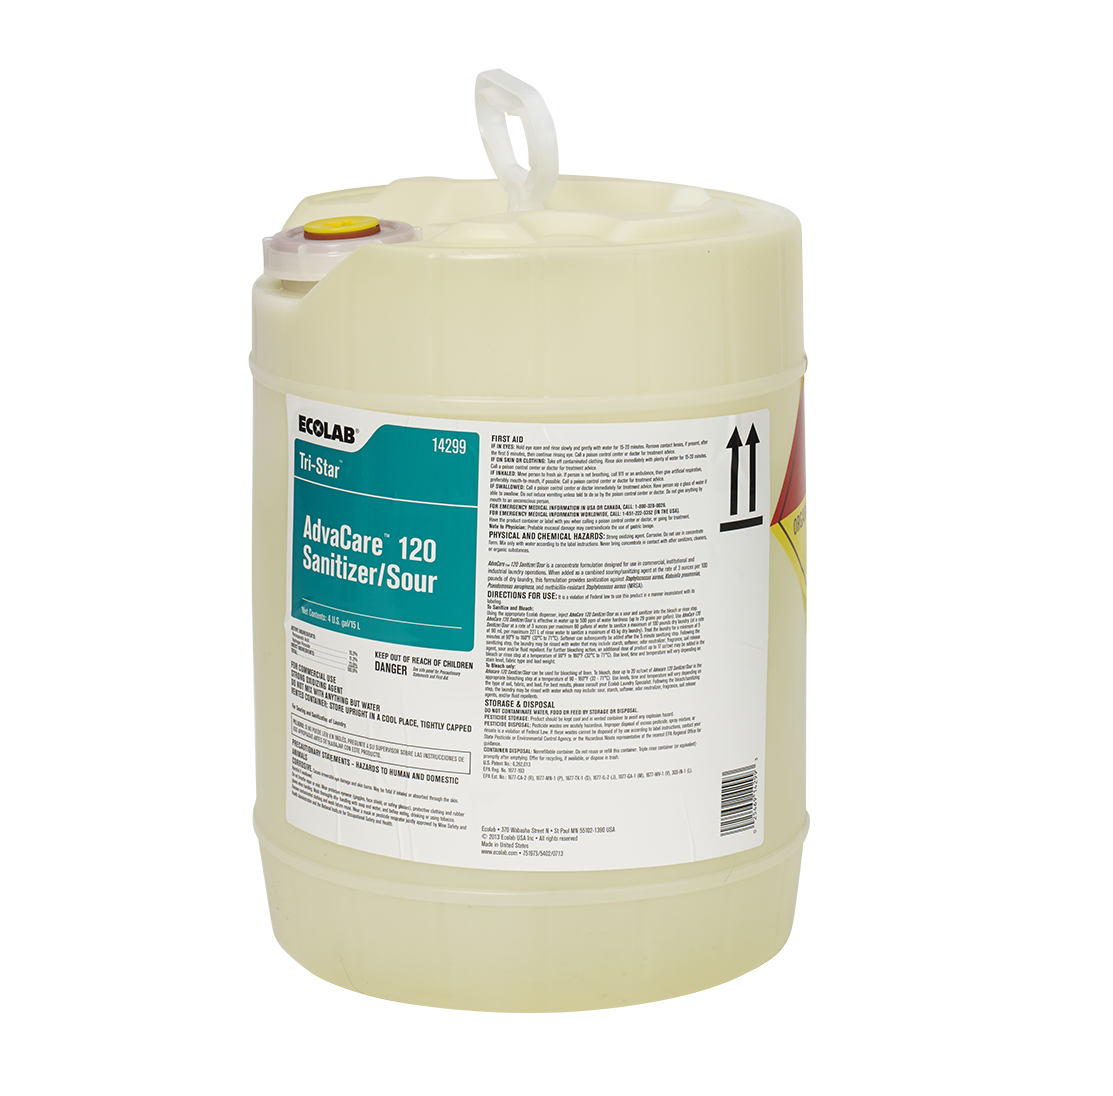 Ecolab Advacare 120 Sanitizer/Sour - 1 Gallon, 4/Case